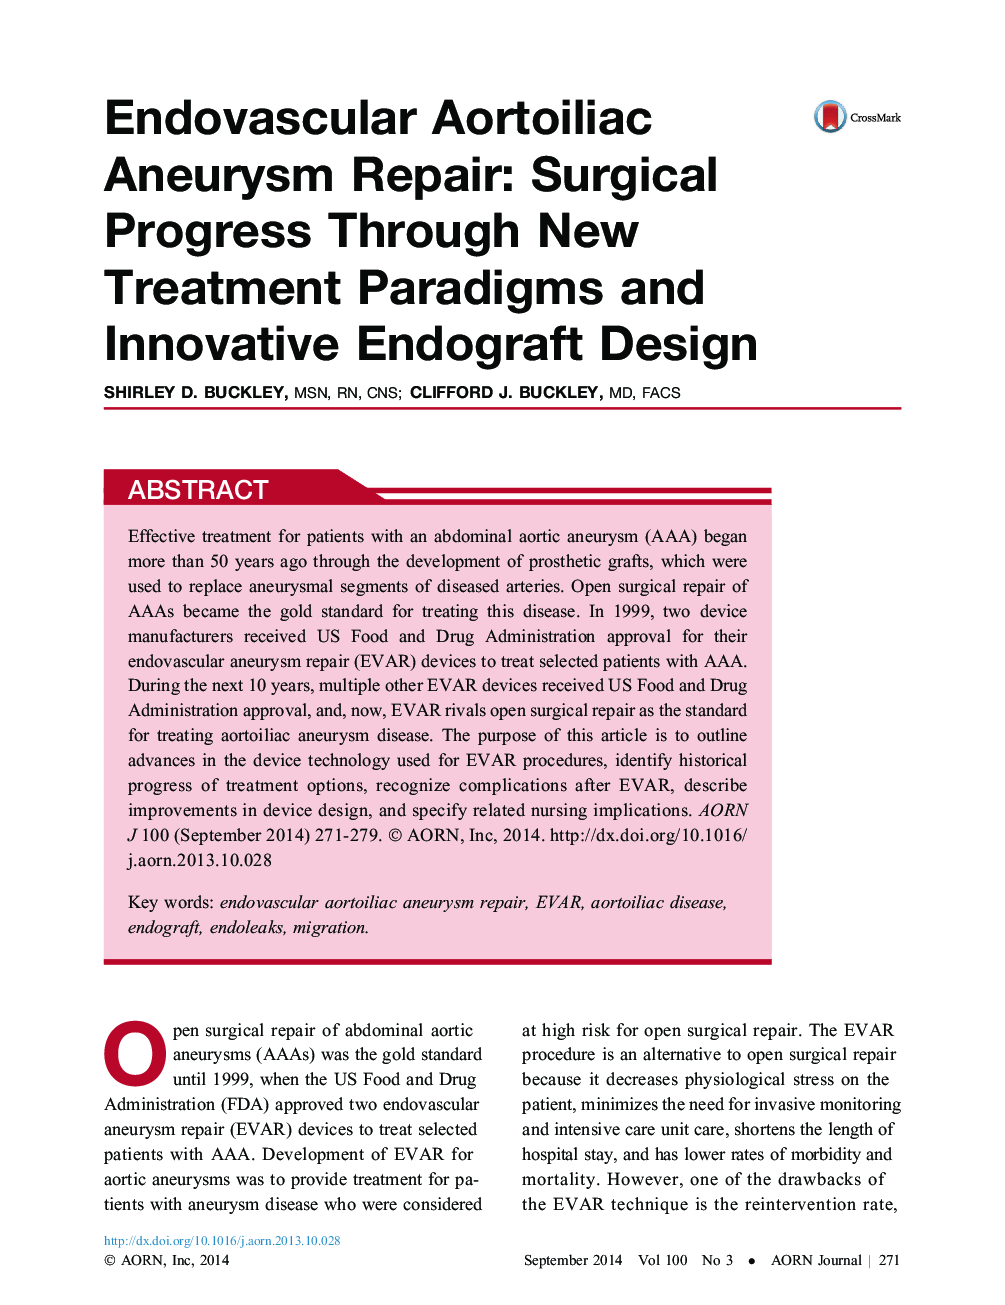 Endovascular Aortoiliac Aneurysm Repair: Surgical Progress Through New Treatment Paradigms and Innovative Endograft Design